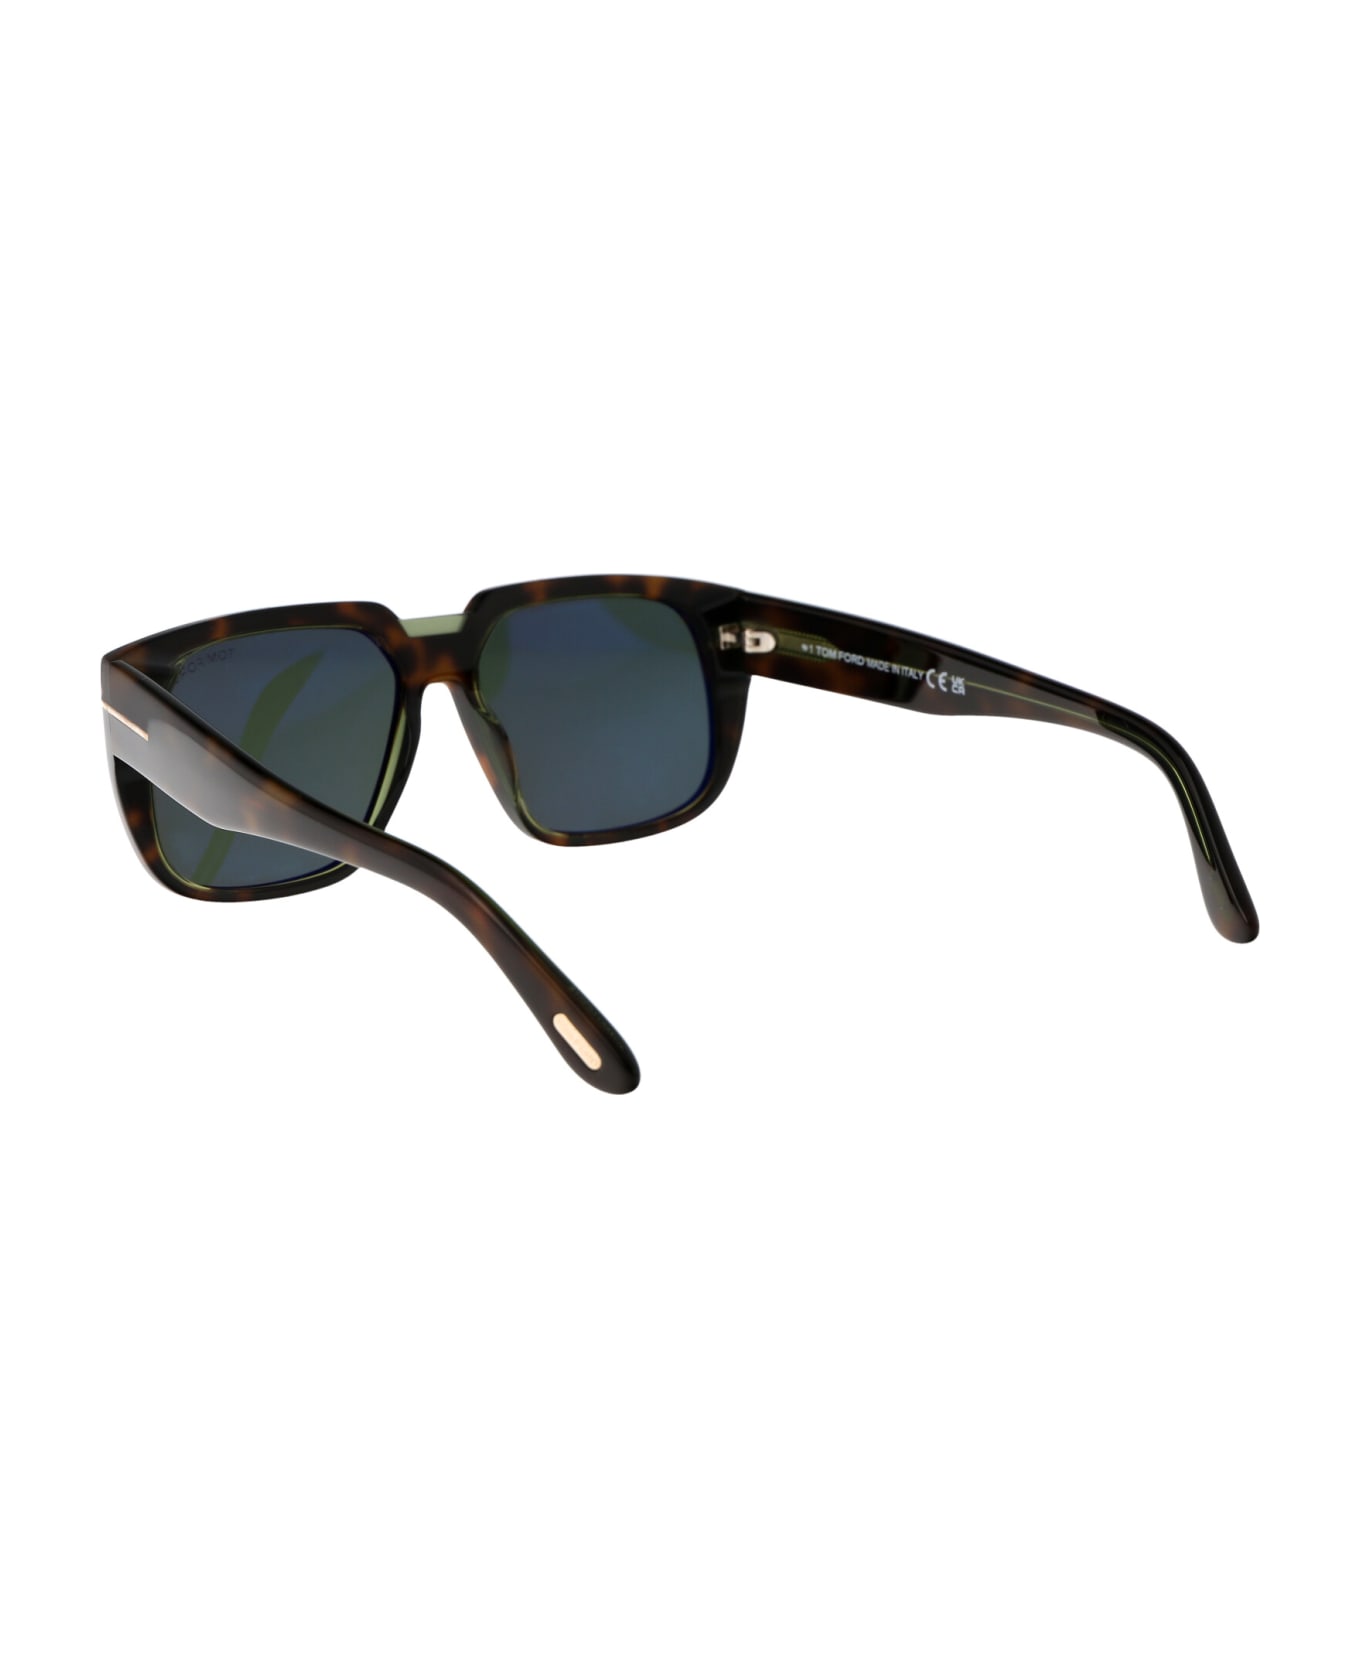 Tom Ford Eyewear Oliver-02 Sunglasses - 56Dunhill Ferry tortoiseshell rectangular sunglasses